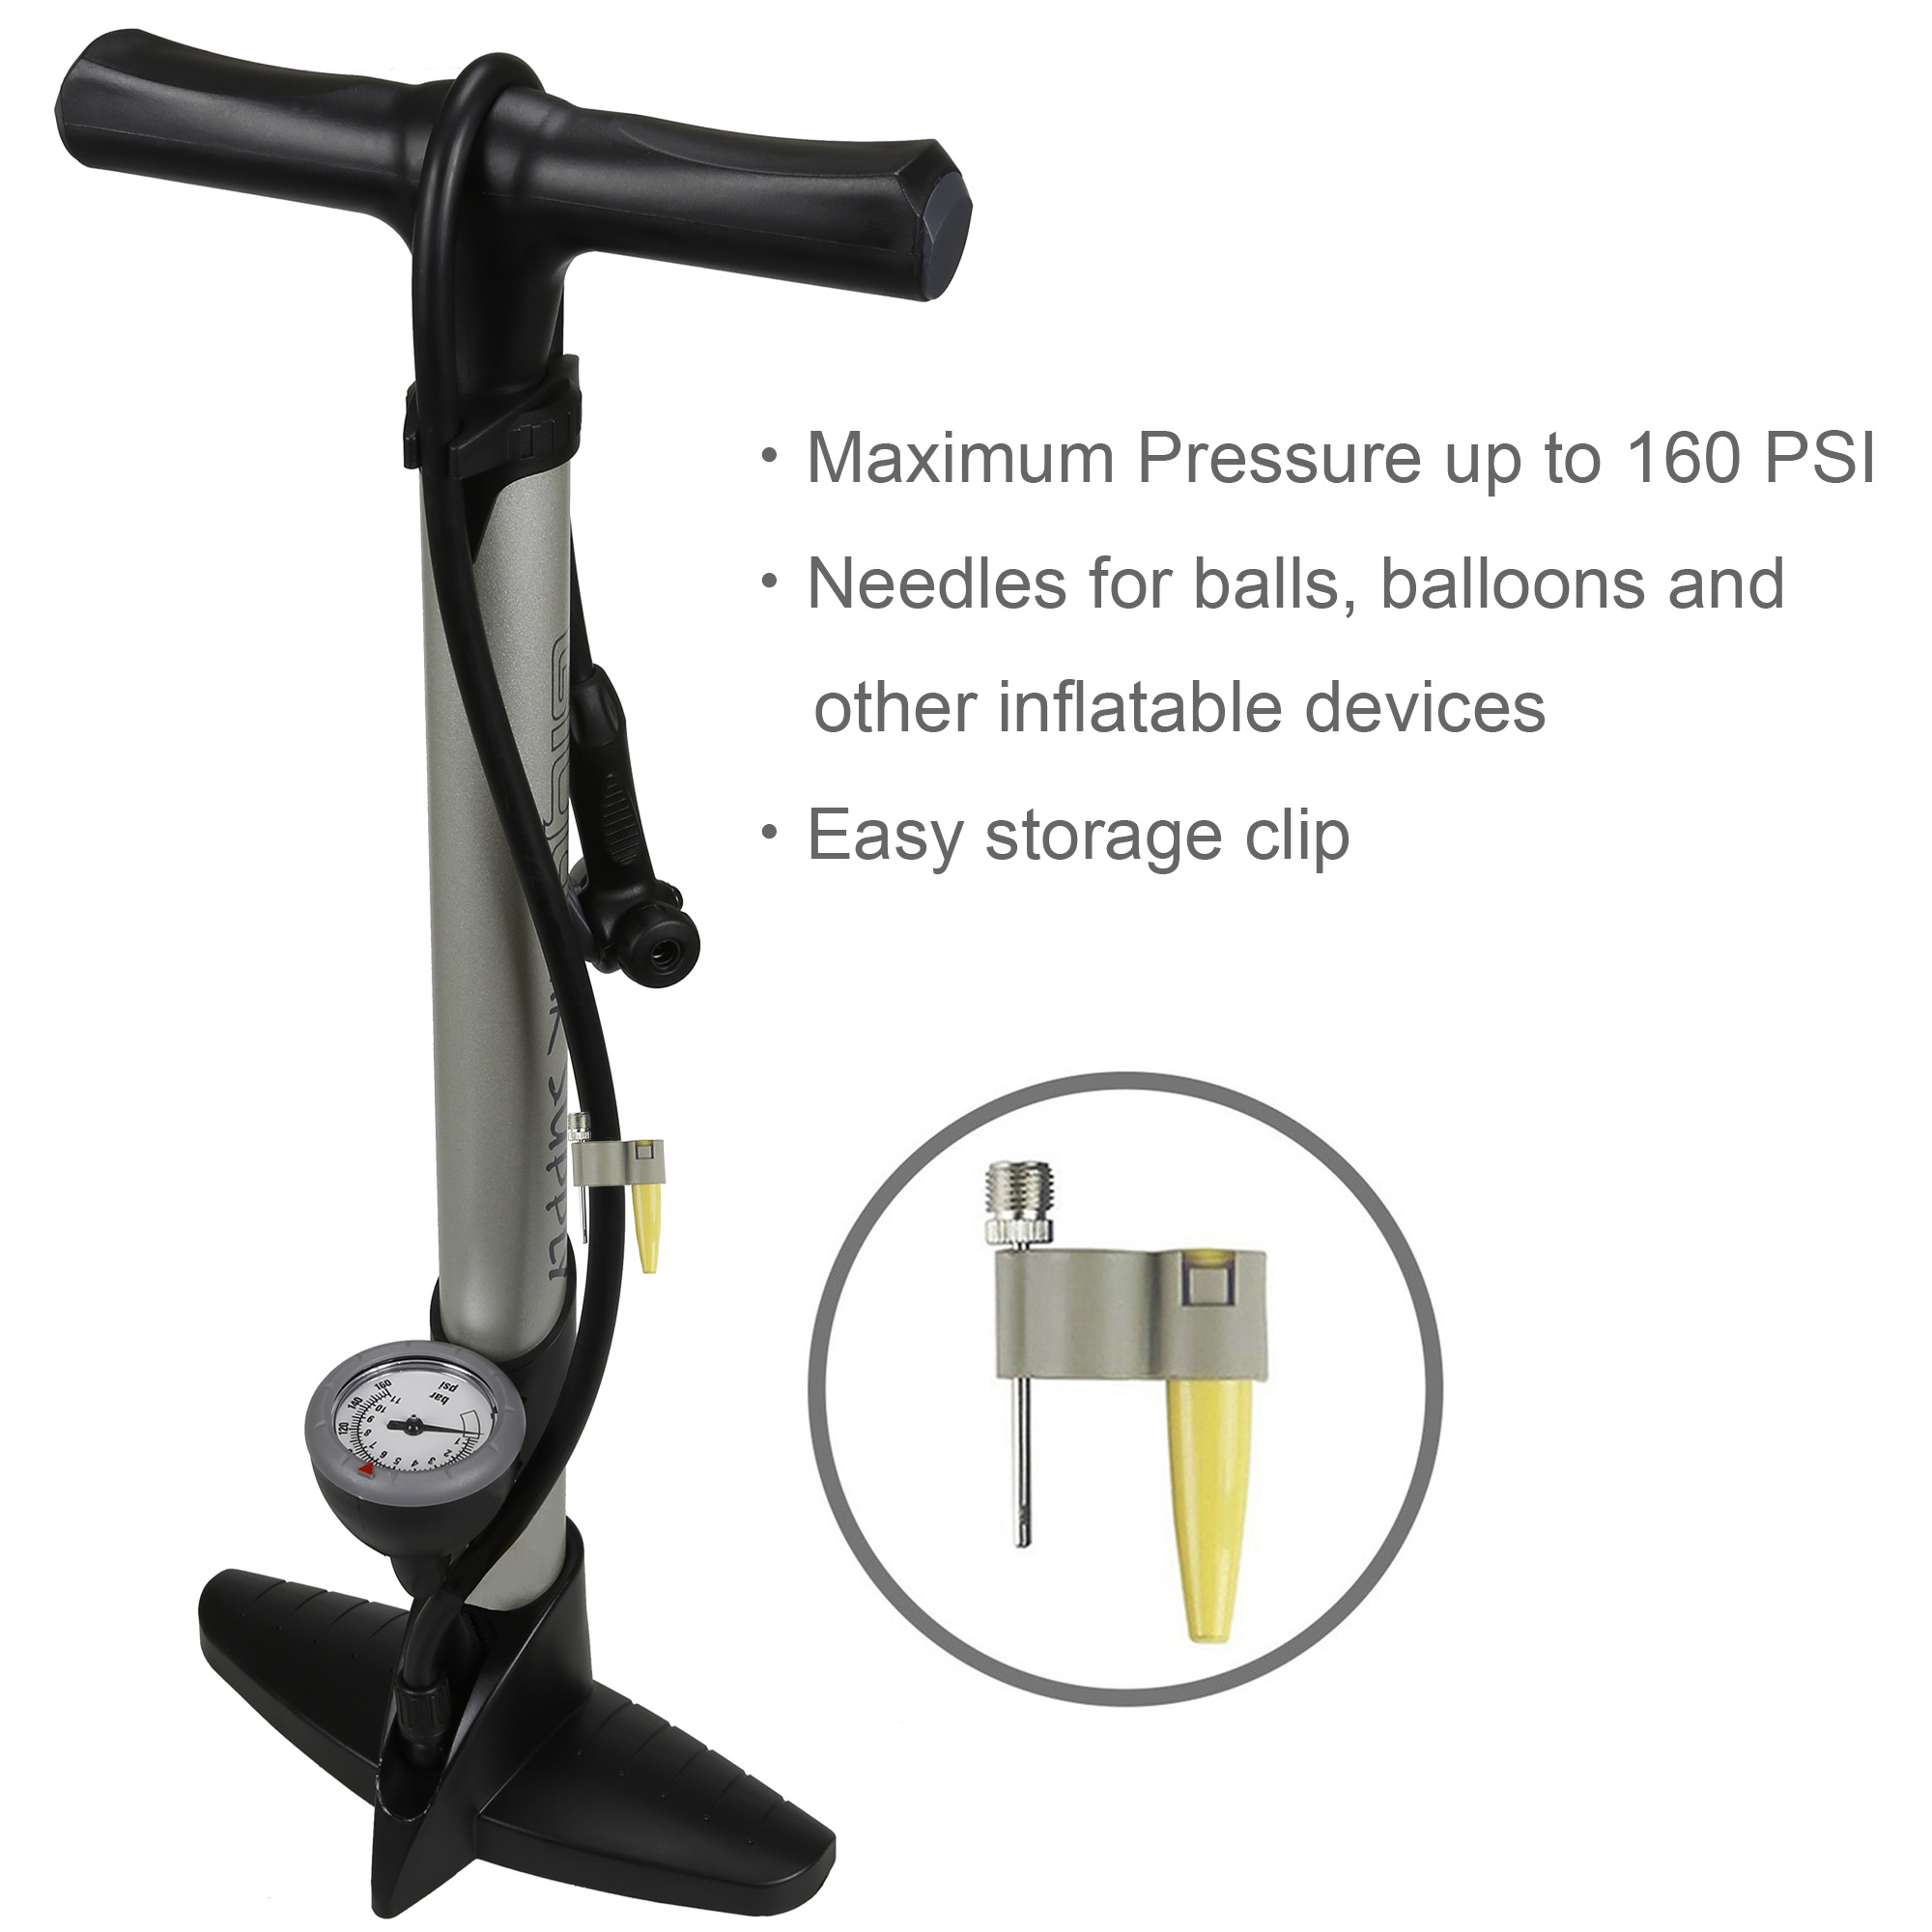 high pressure bicycle air pump